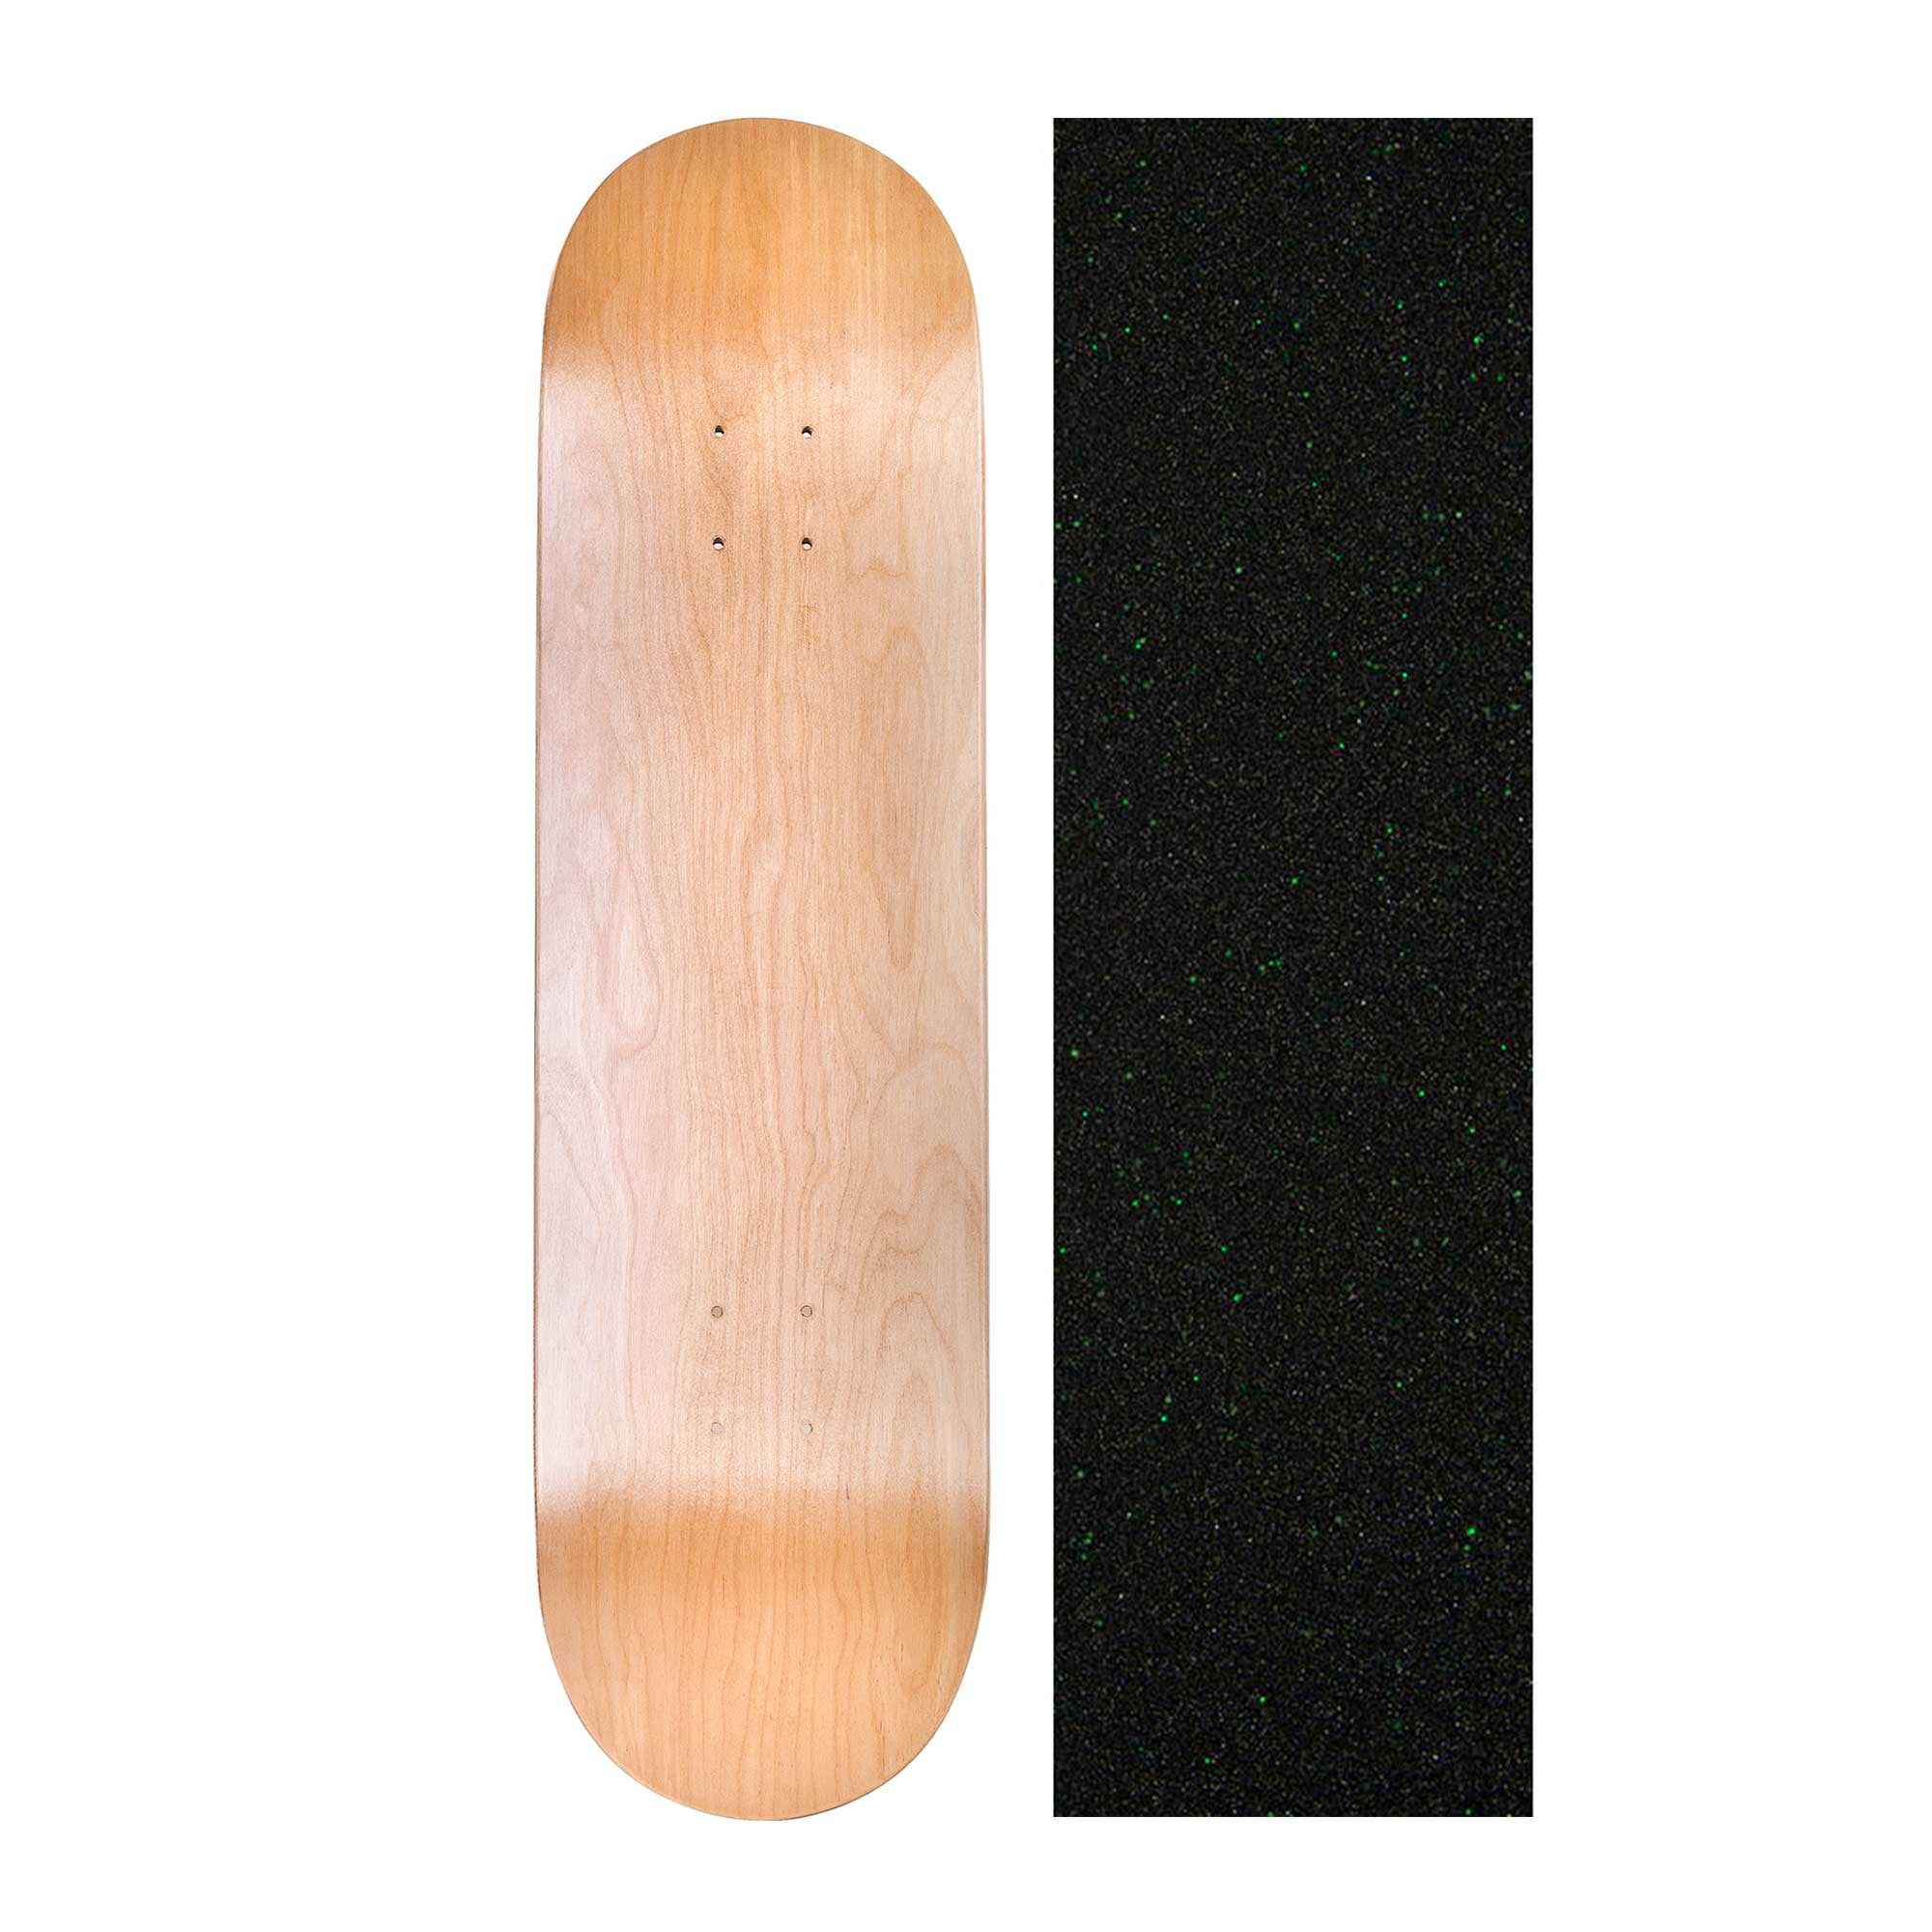 Size 10 Pro Skateboard Decks Blank Choose Your Color 7.75 8.0 8.25 8.5